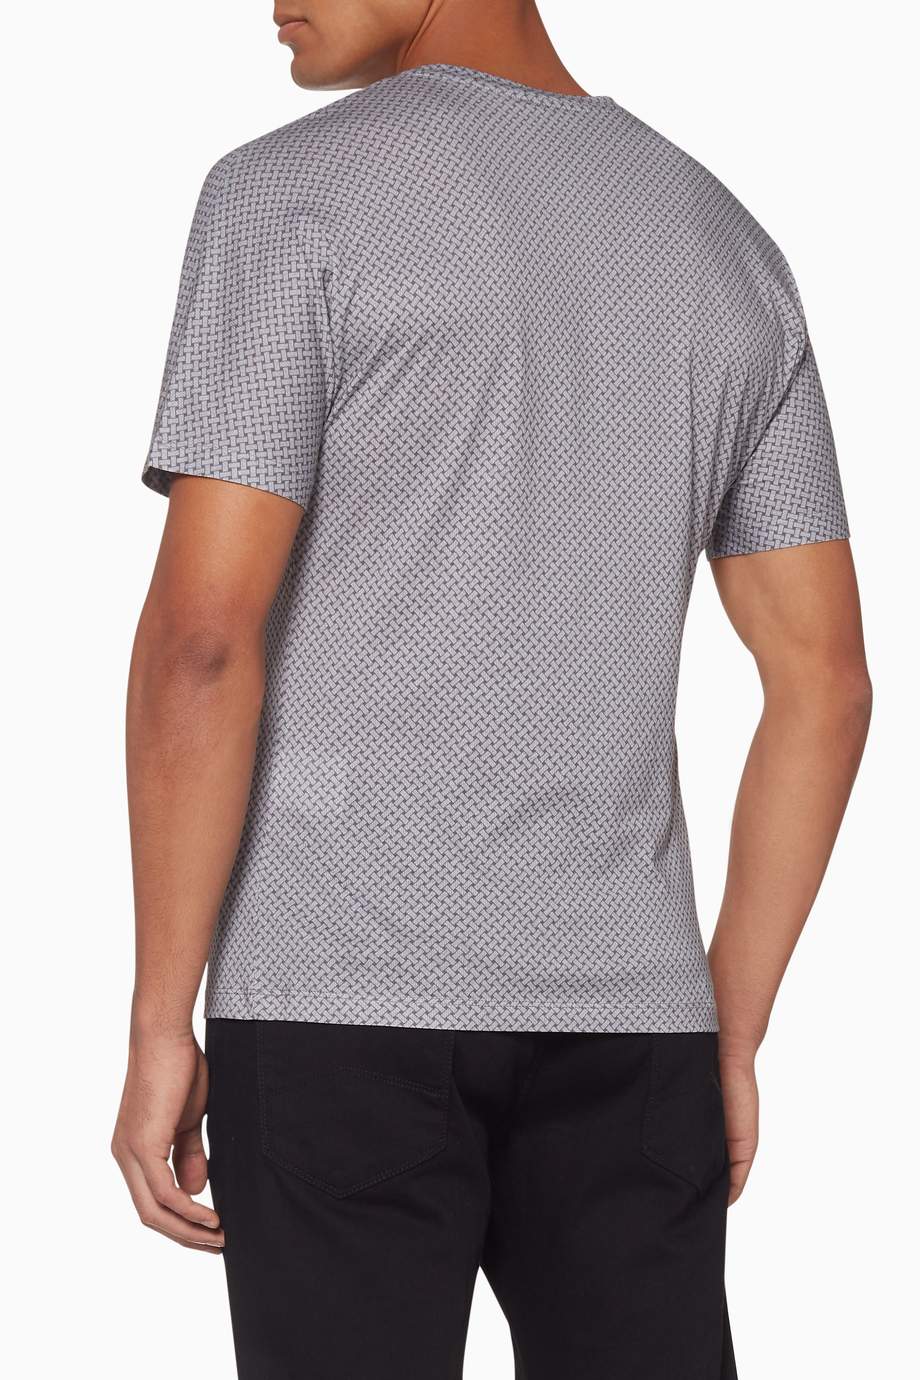 Shop Emporio Armani Grey Woven Pattern V-Neck T-Shirt for Men | Ounass UAE